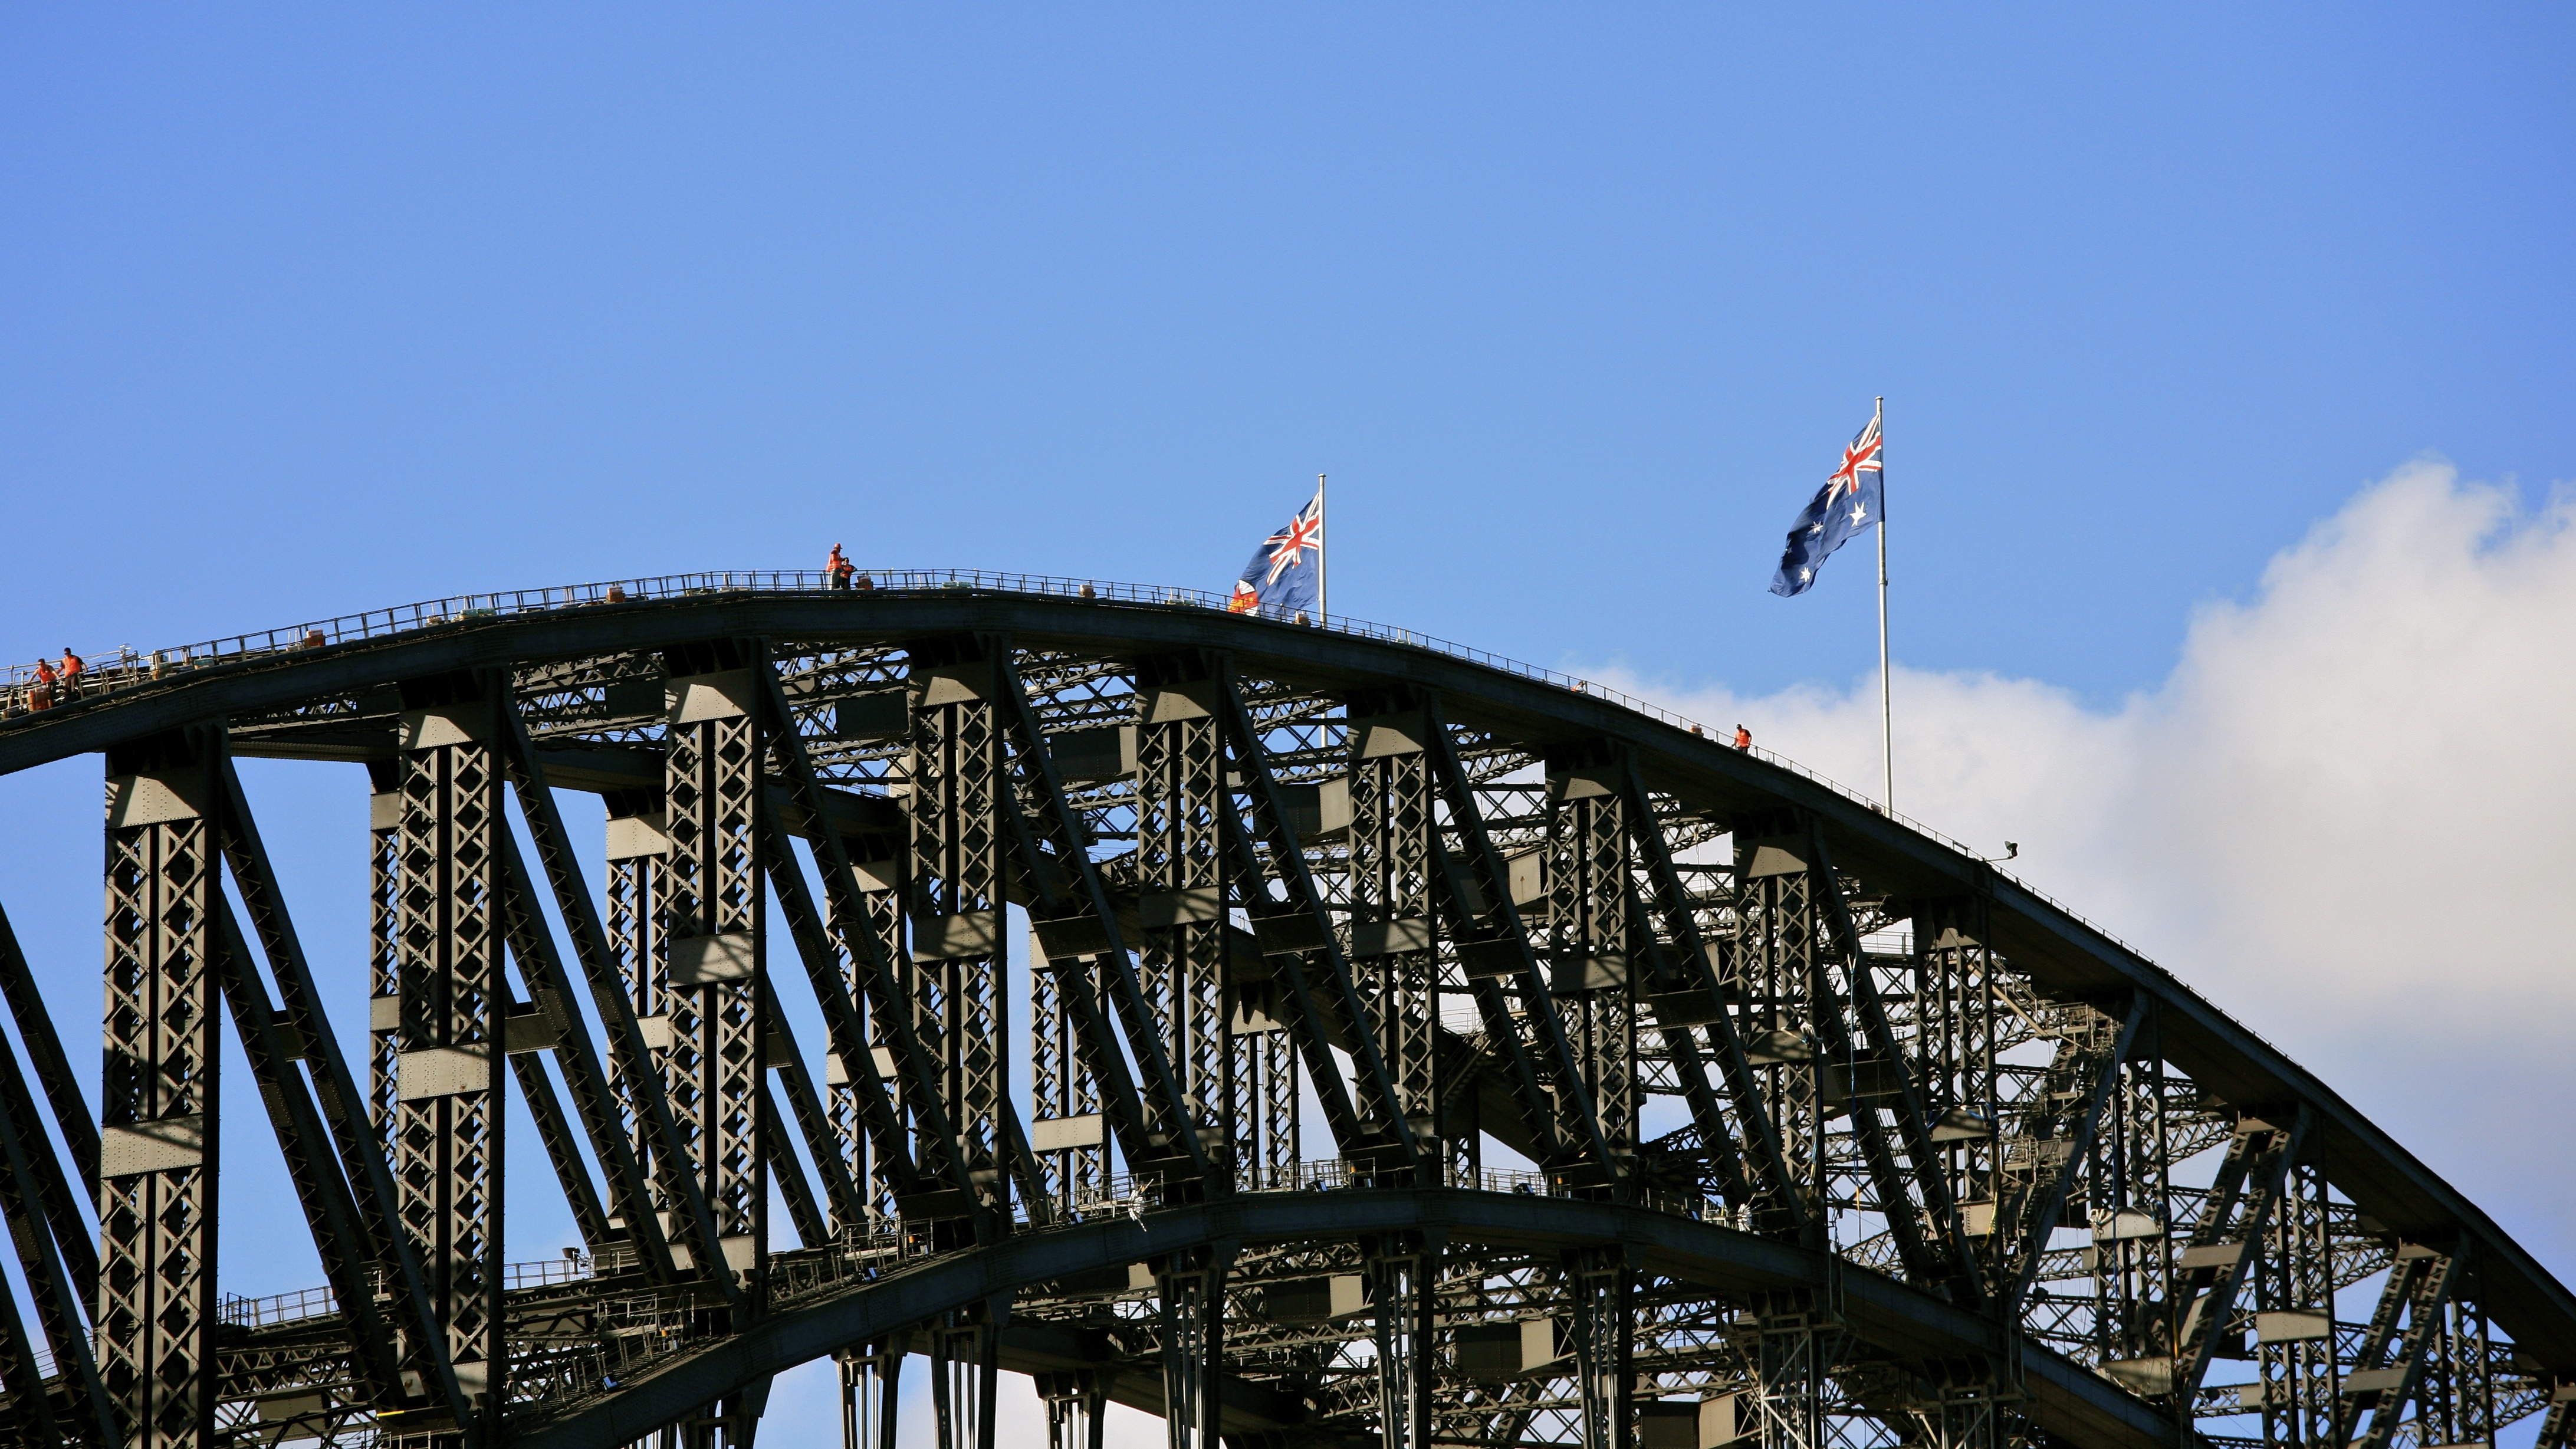 File:People on the Bridge (6619482899).jpg - Wikimedia Commons